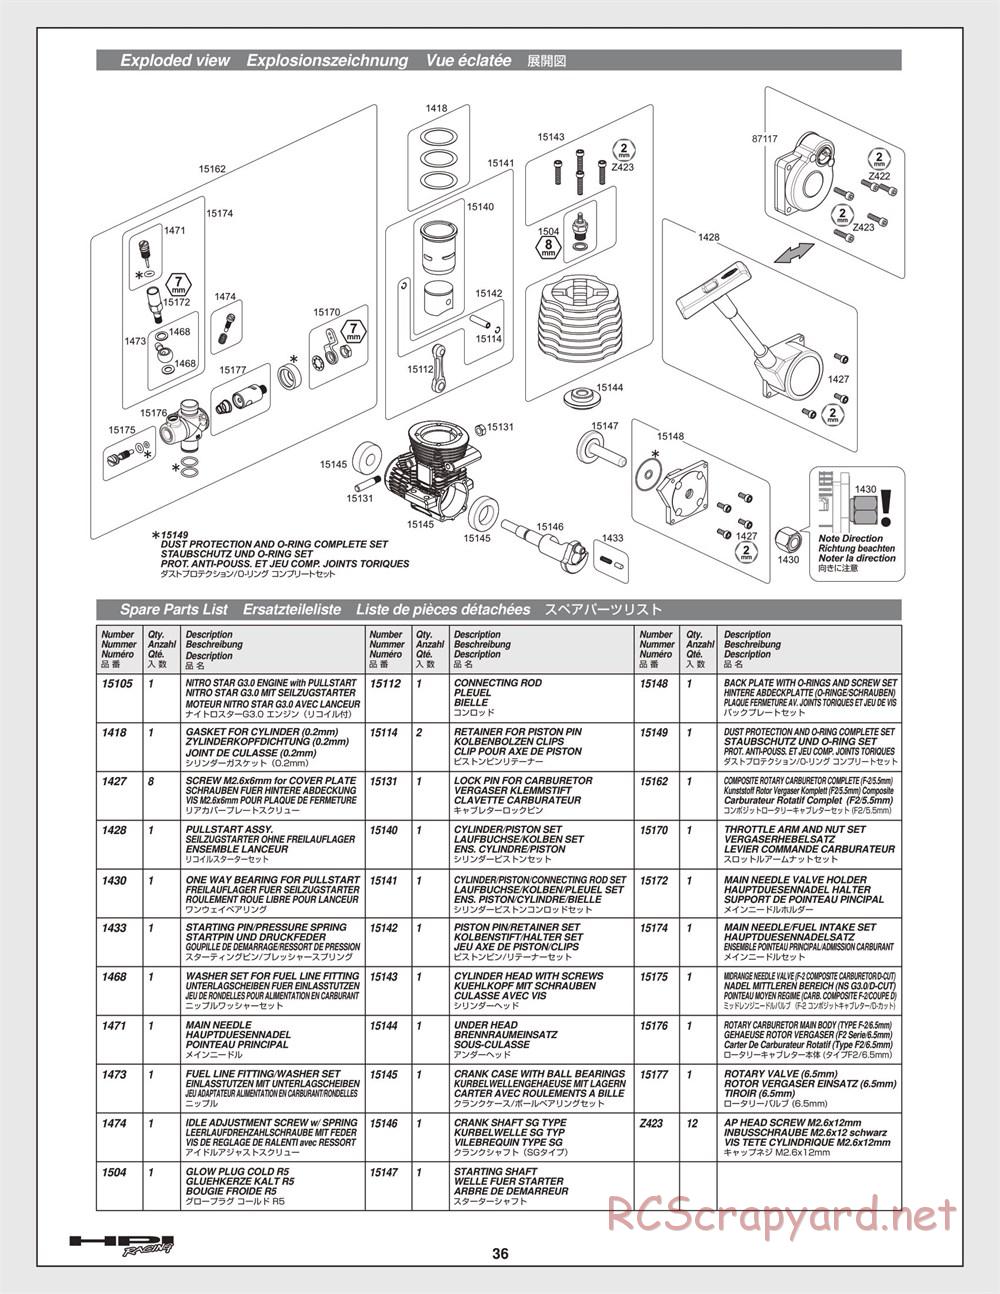 HPI - Nitro MT2 G3.0 - Manual - Page 36